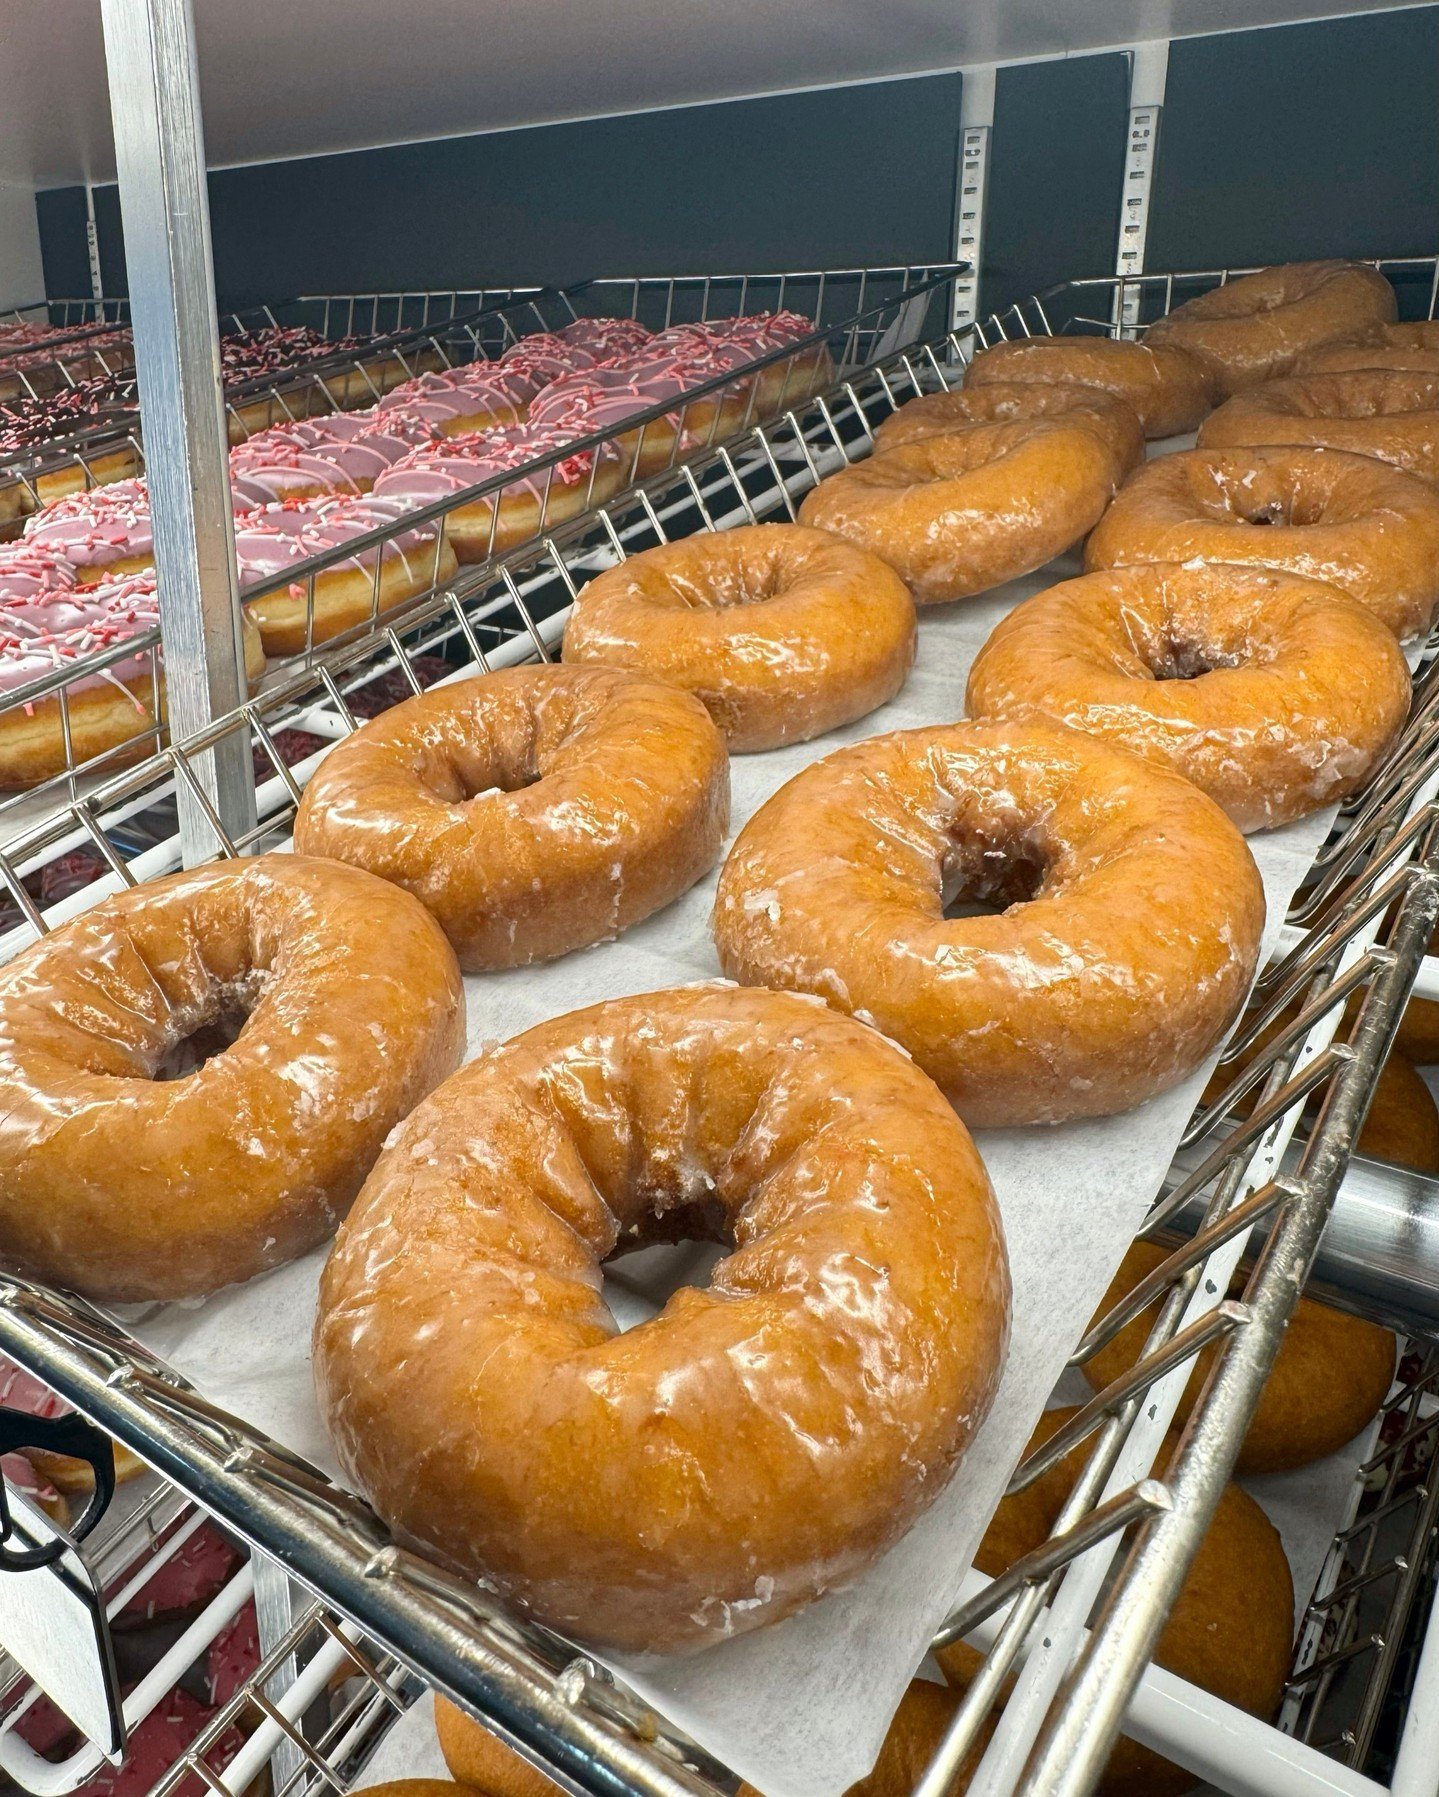 🍩🍰☕ Embrace the classic! Enjoy the timeless taste of our glazed old-fashioned cake donut. Perfect for any moment that calls for a little sweetness.

📍 Bohemia, NY
📞 631-256-5140
📞 631-319-6266
🌐 www.GlennWayne.com

#Bakery #CakeDonut #GlazedDon